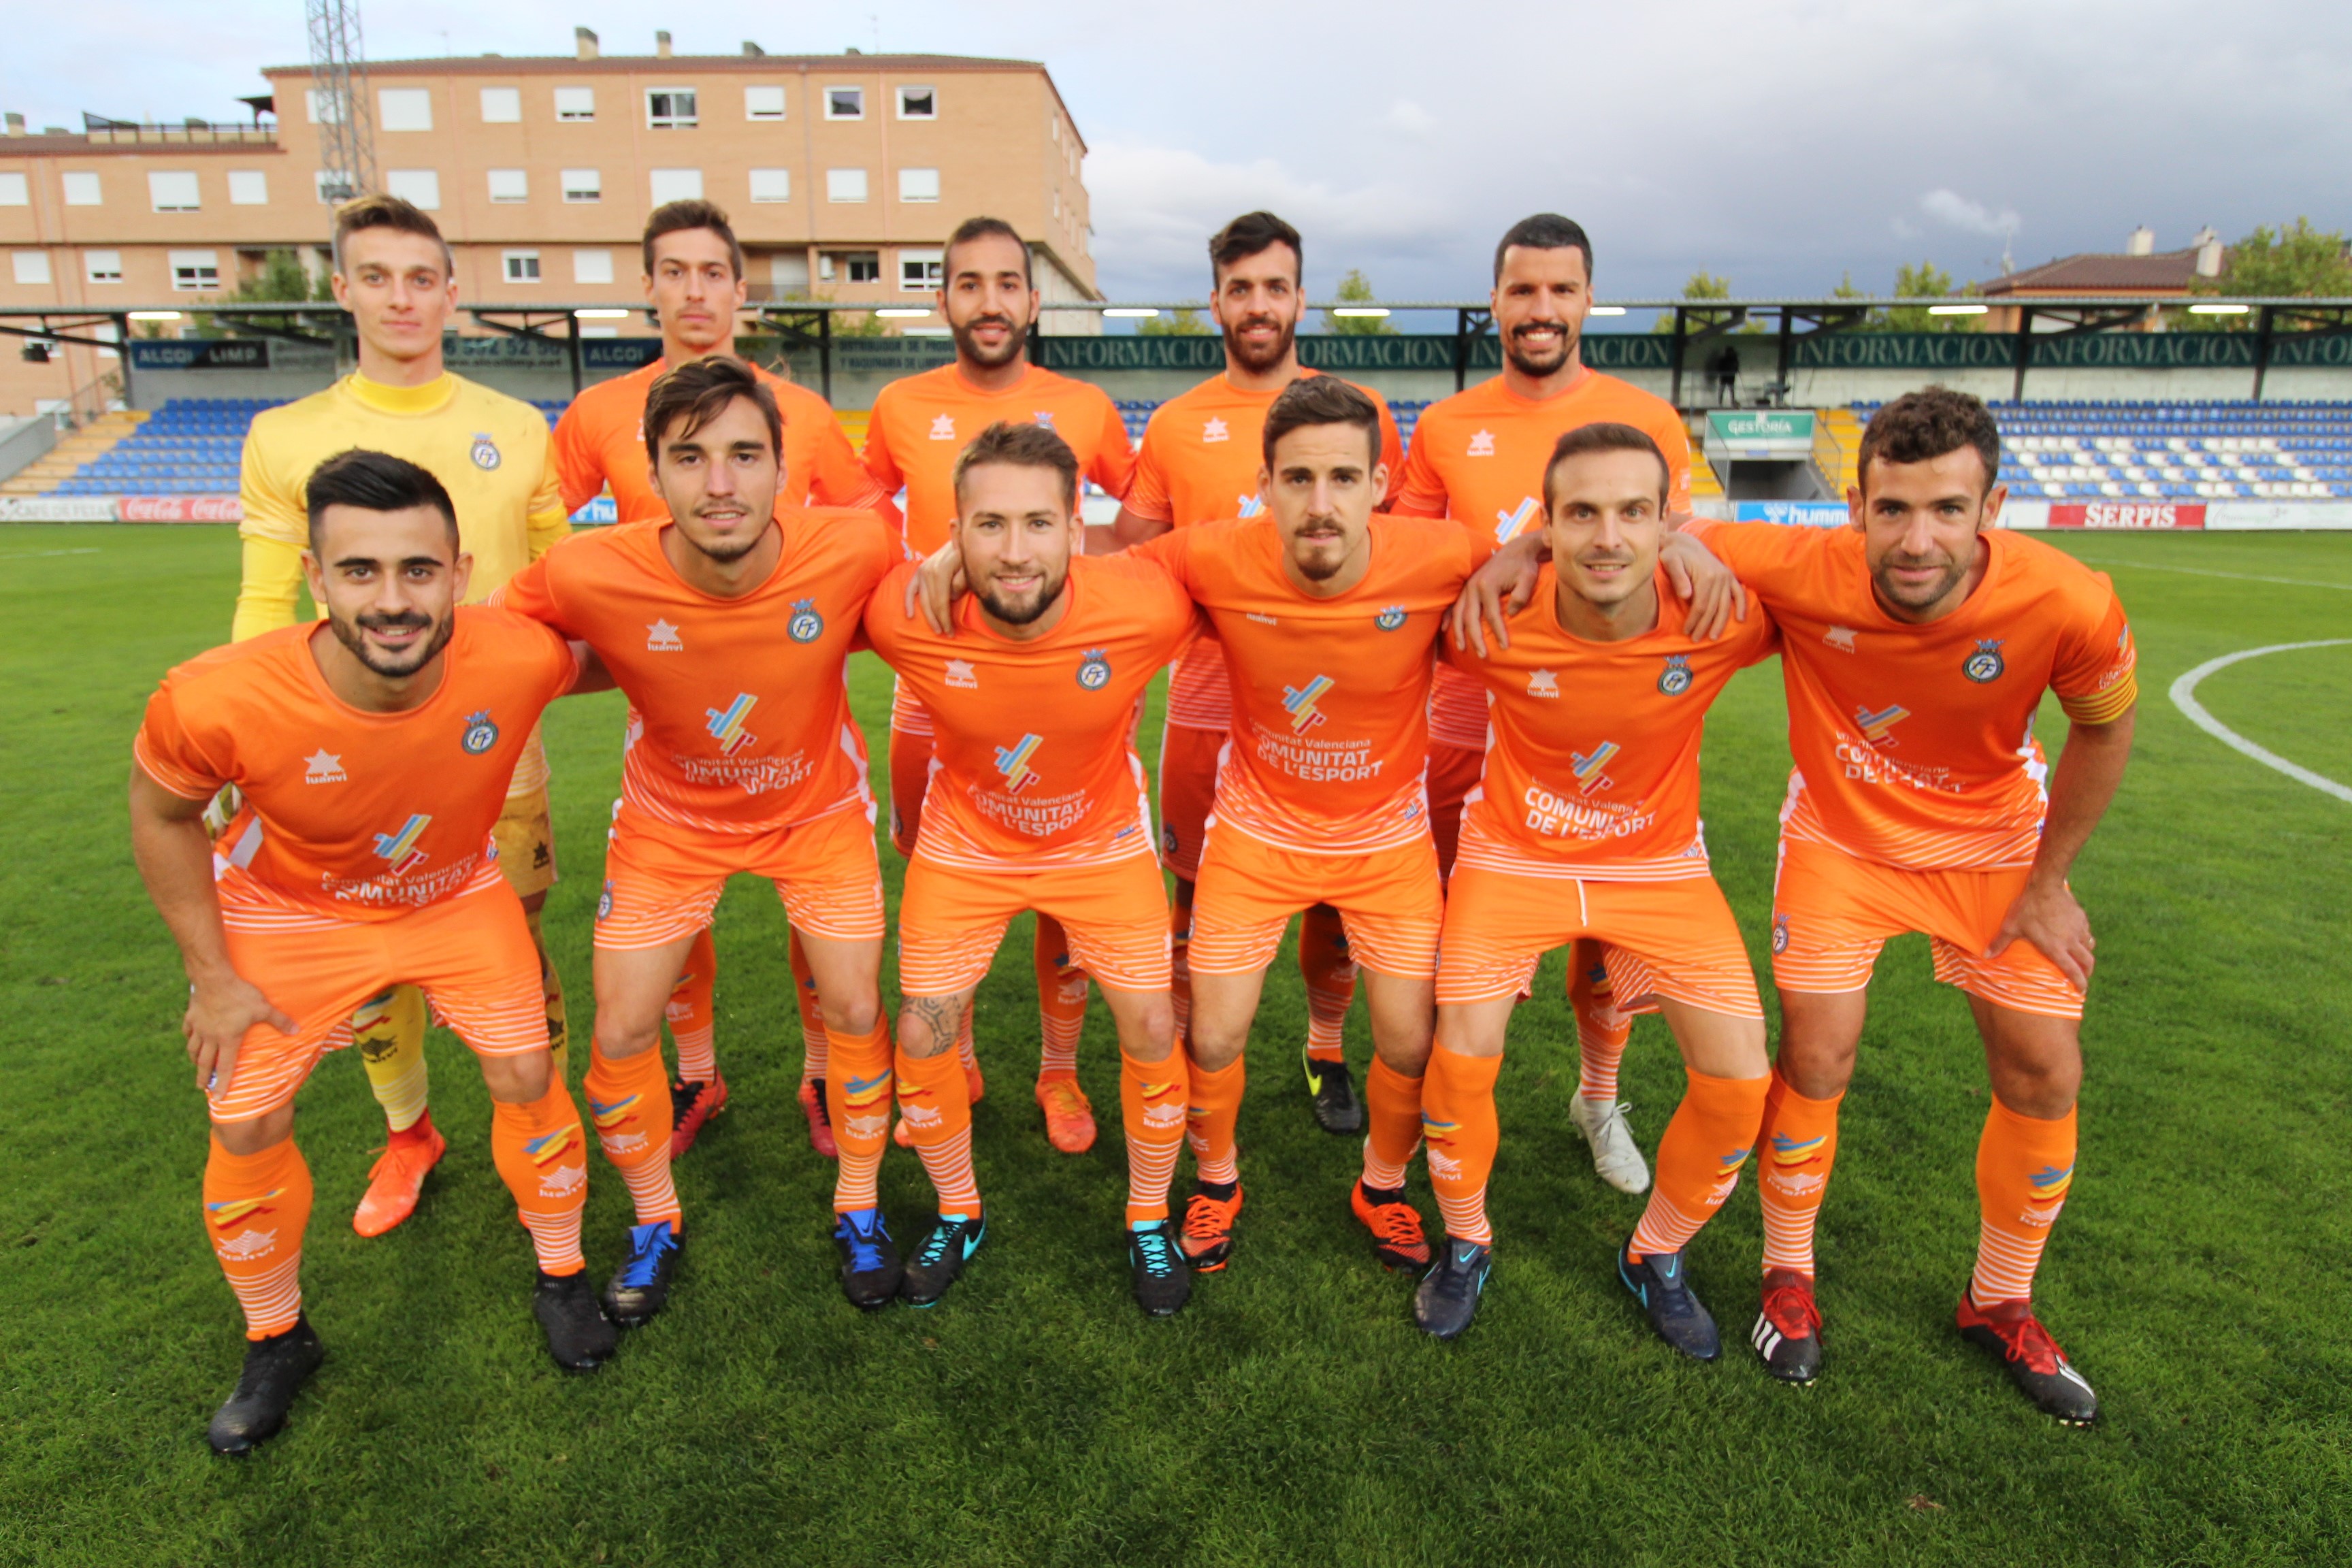 23 oct- Amistoso Selecció El Collao UEFA Regions Cup